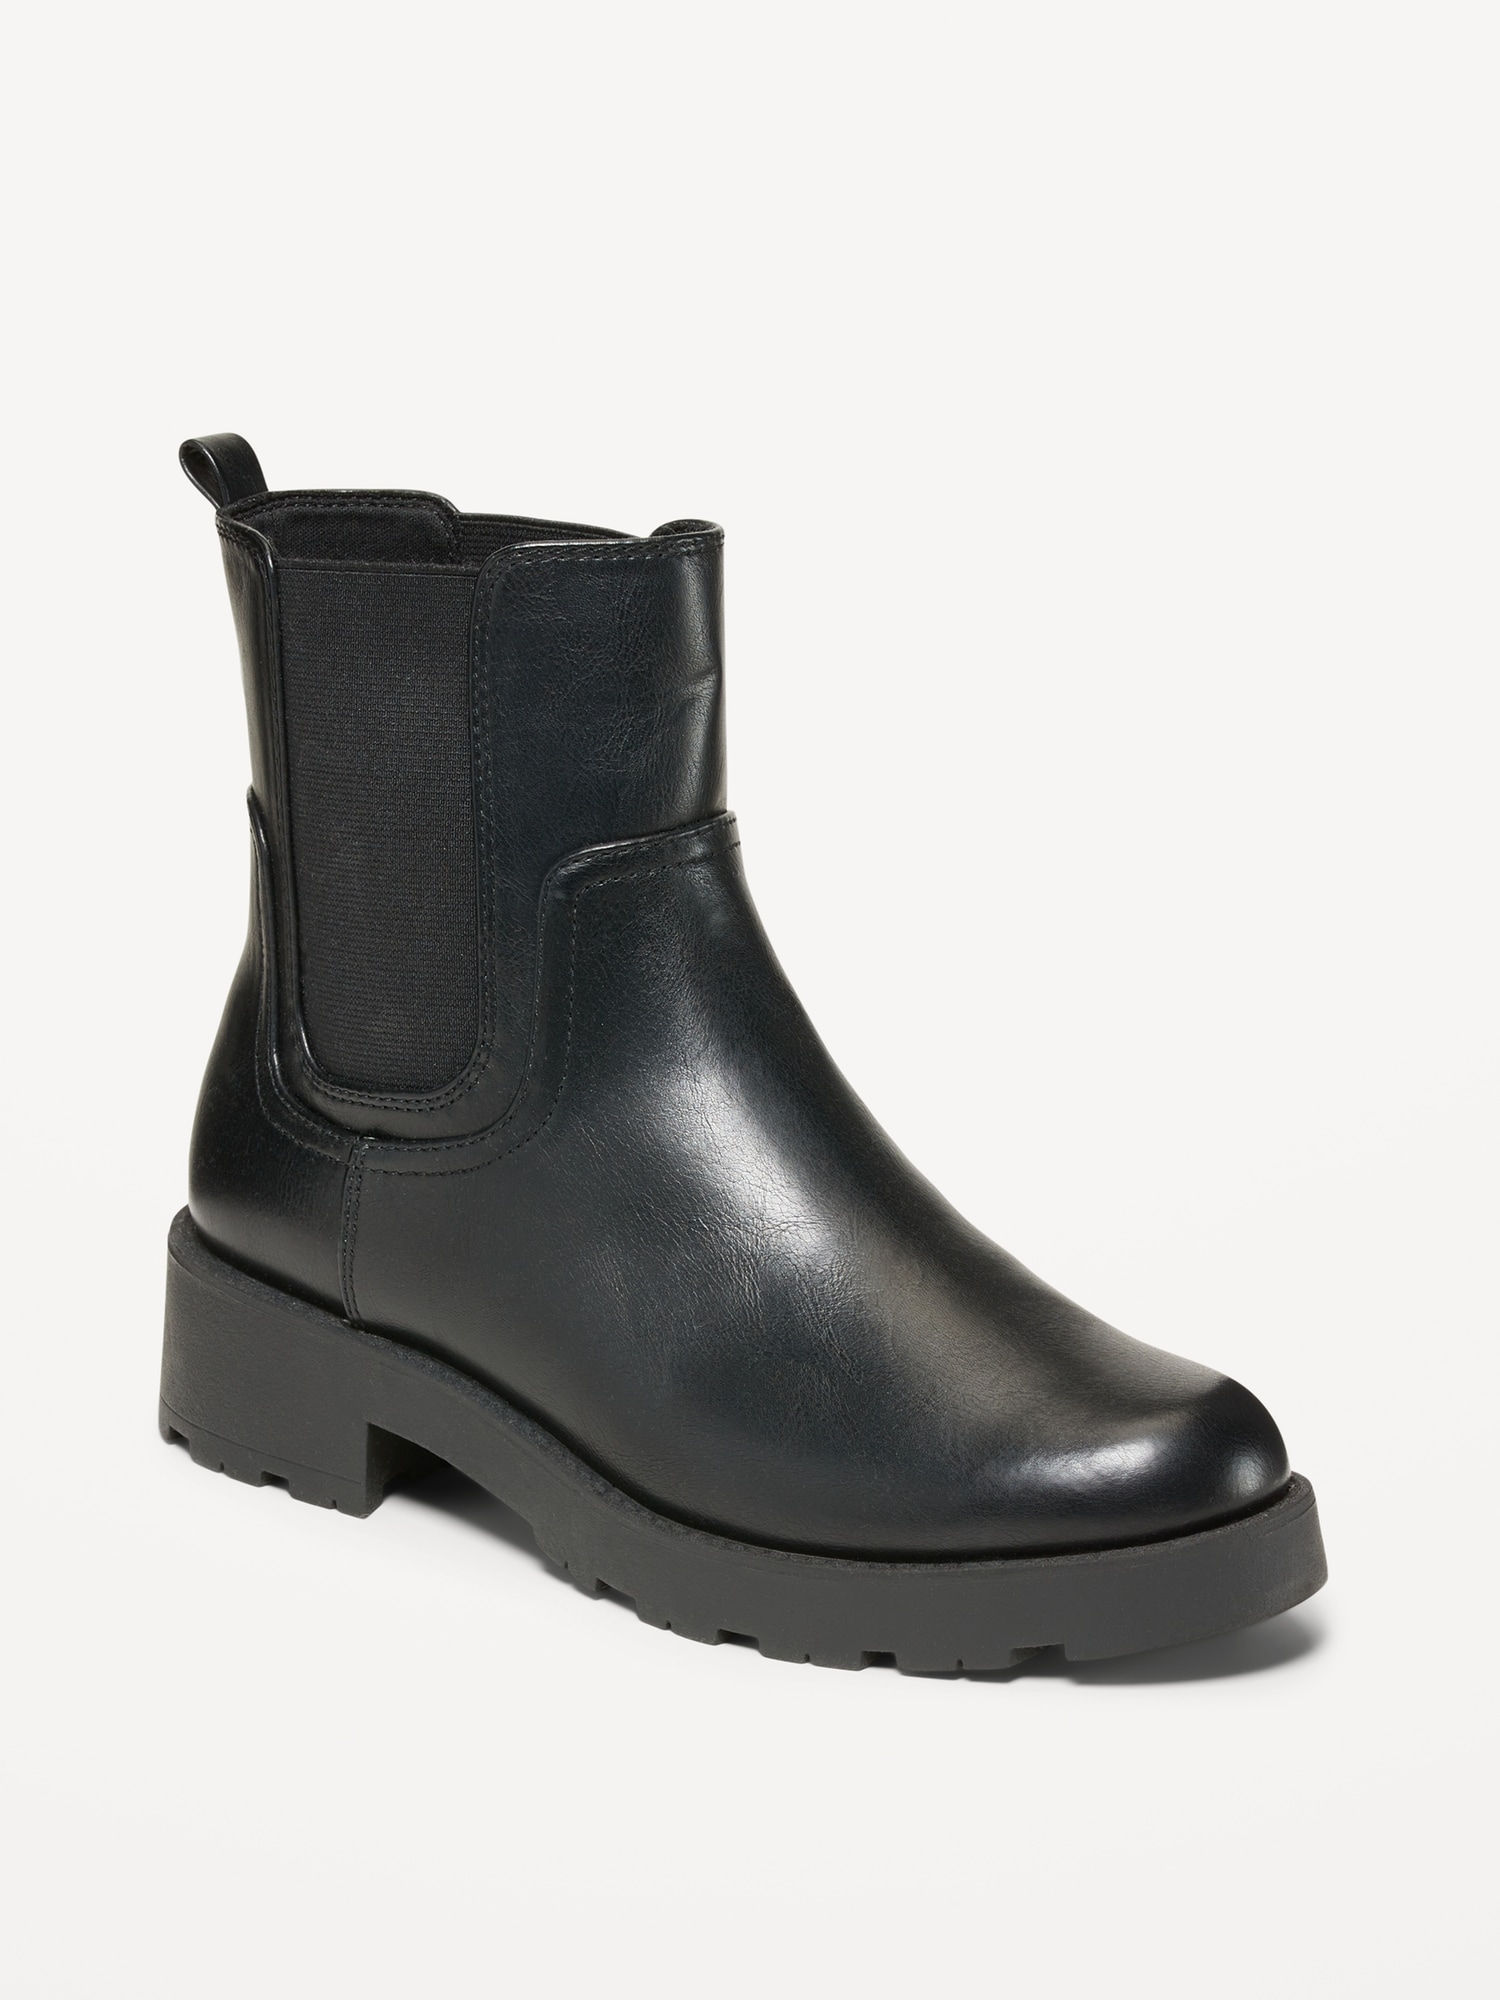 navn Spis aftensmad pessimistisk Faux-Leather Chelsea Boots for Women | Old Navy